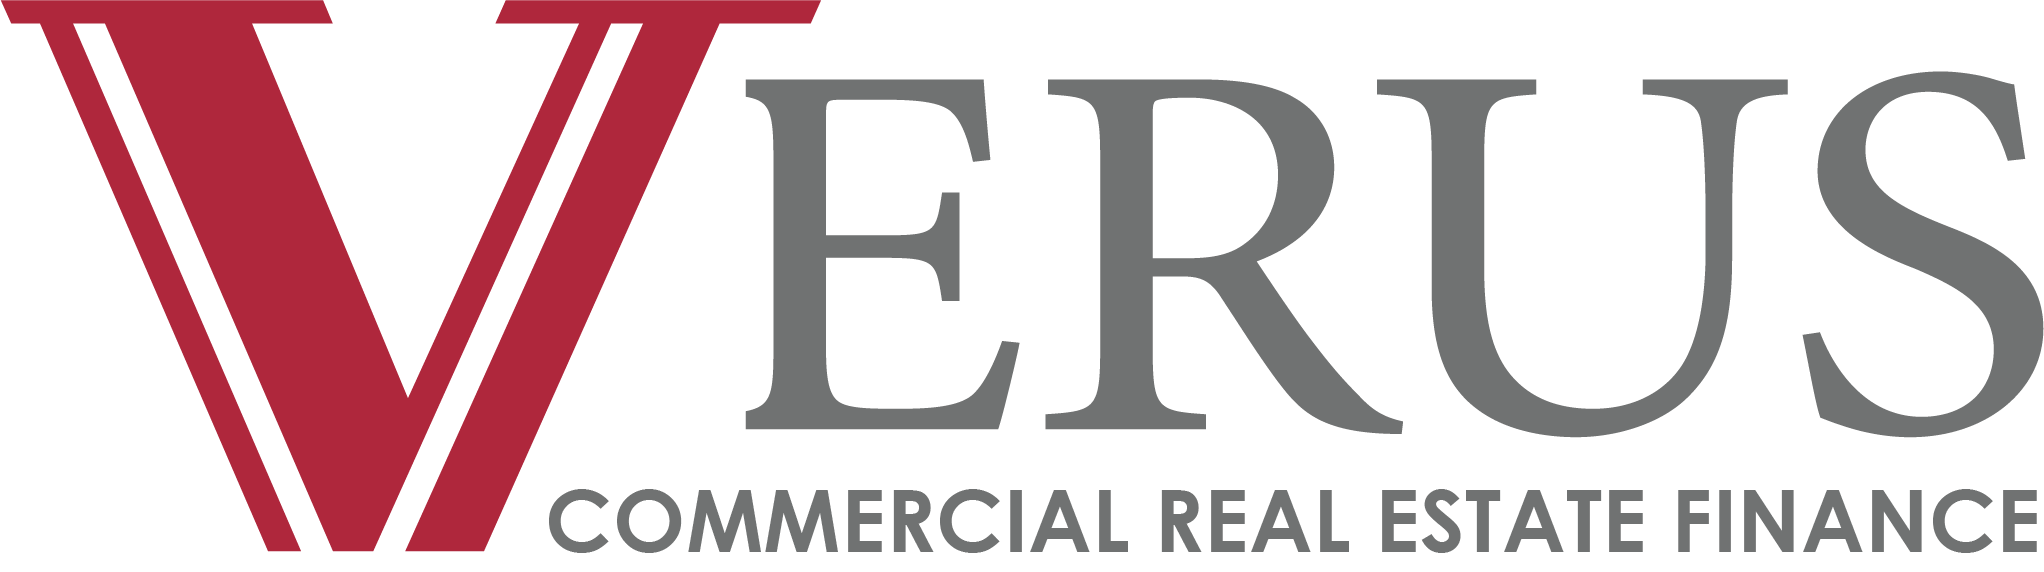 Verus Commercial Real Estate Finance